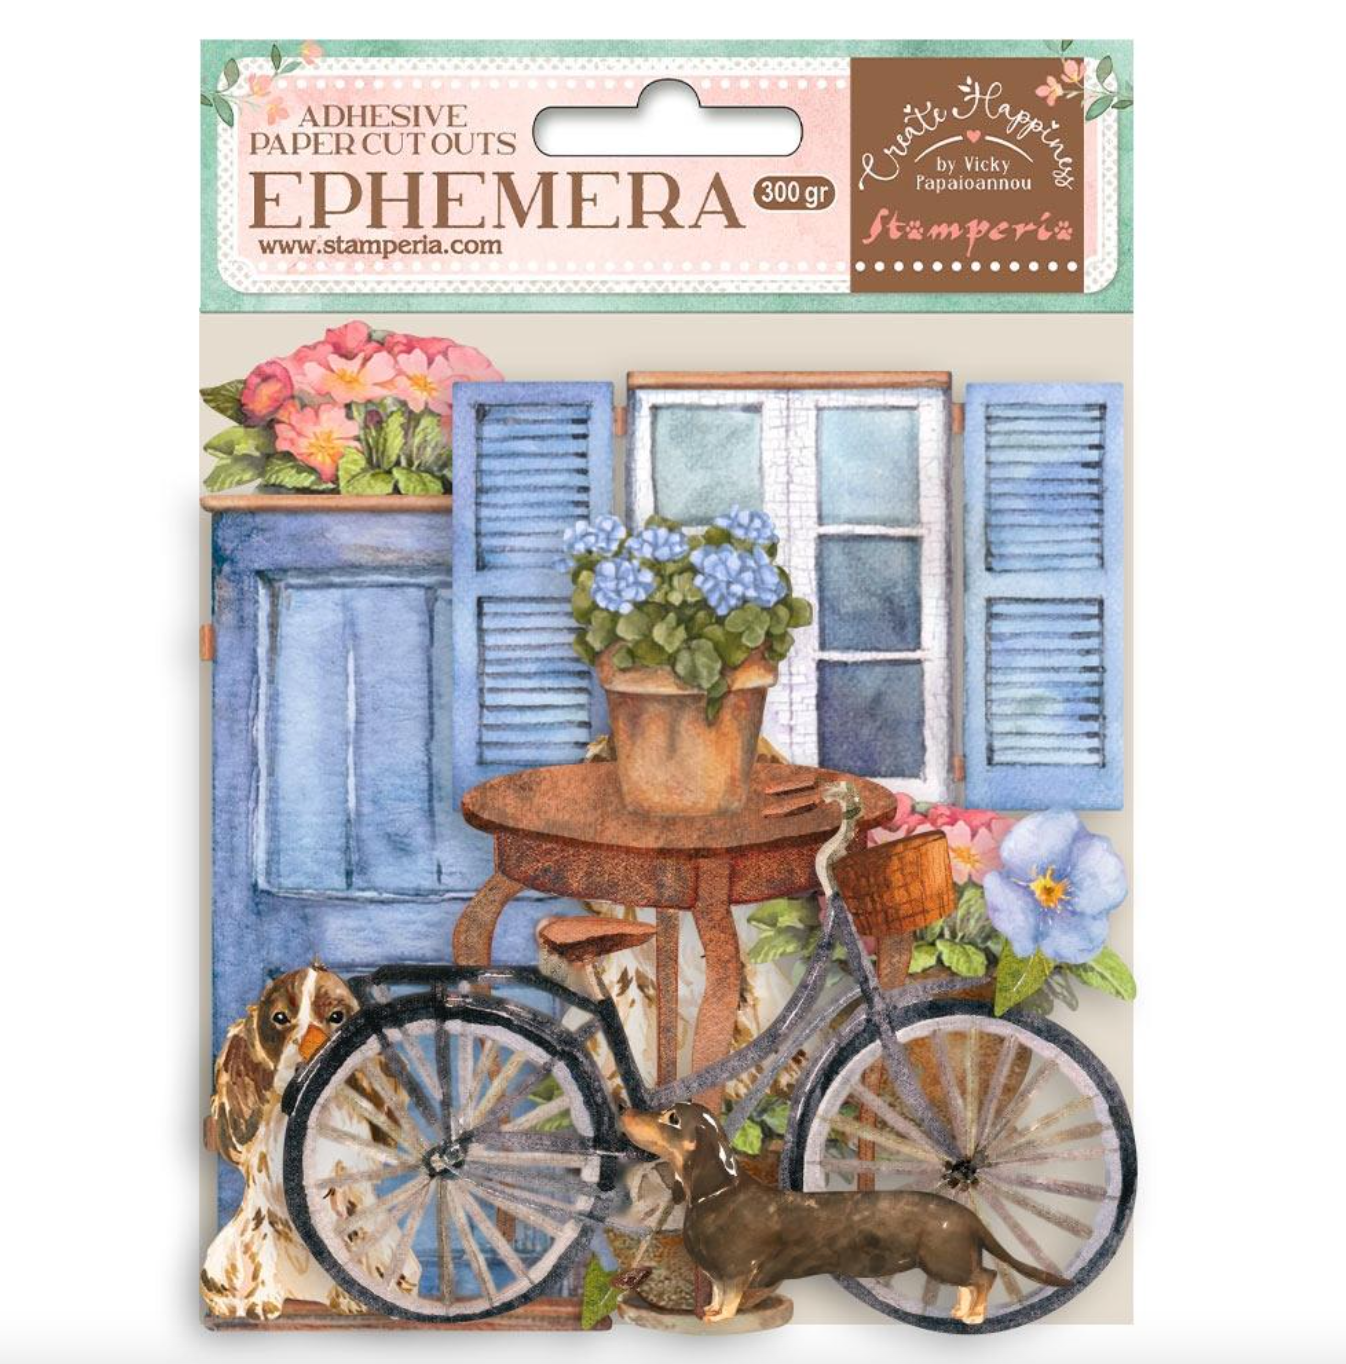 Ephemera - Bicycle - Adhesive Paper Cut Outs - Stamperia